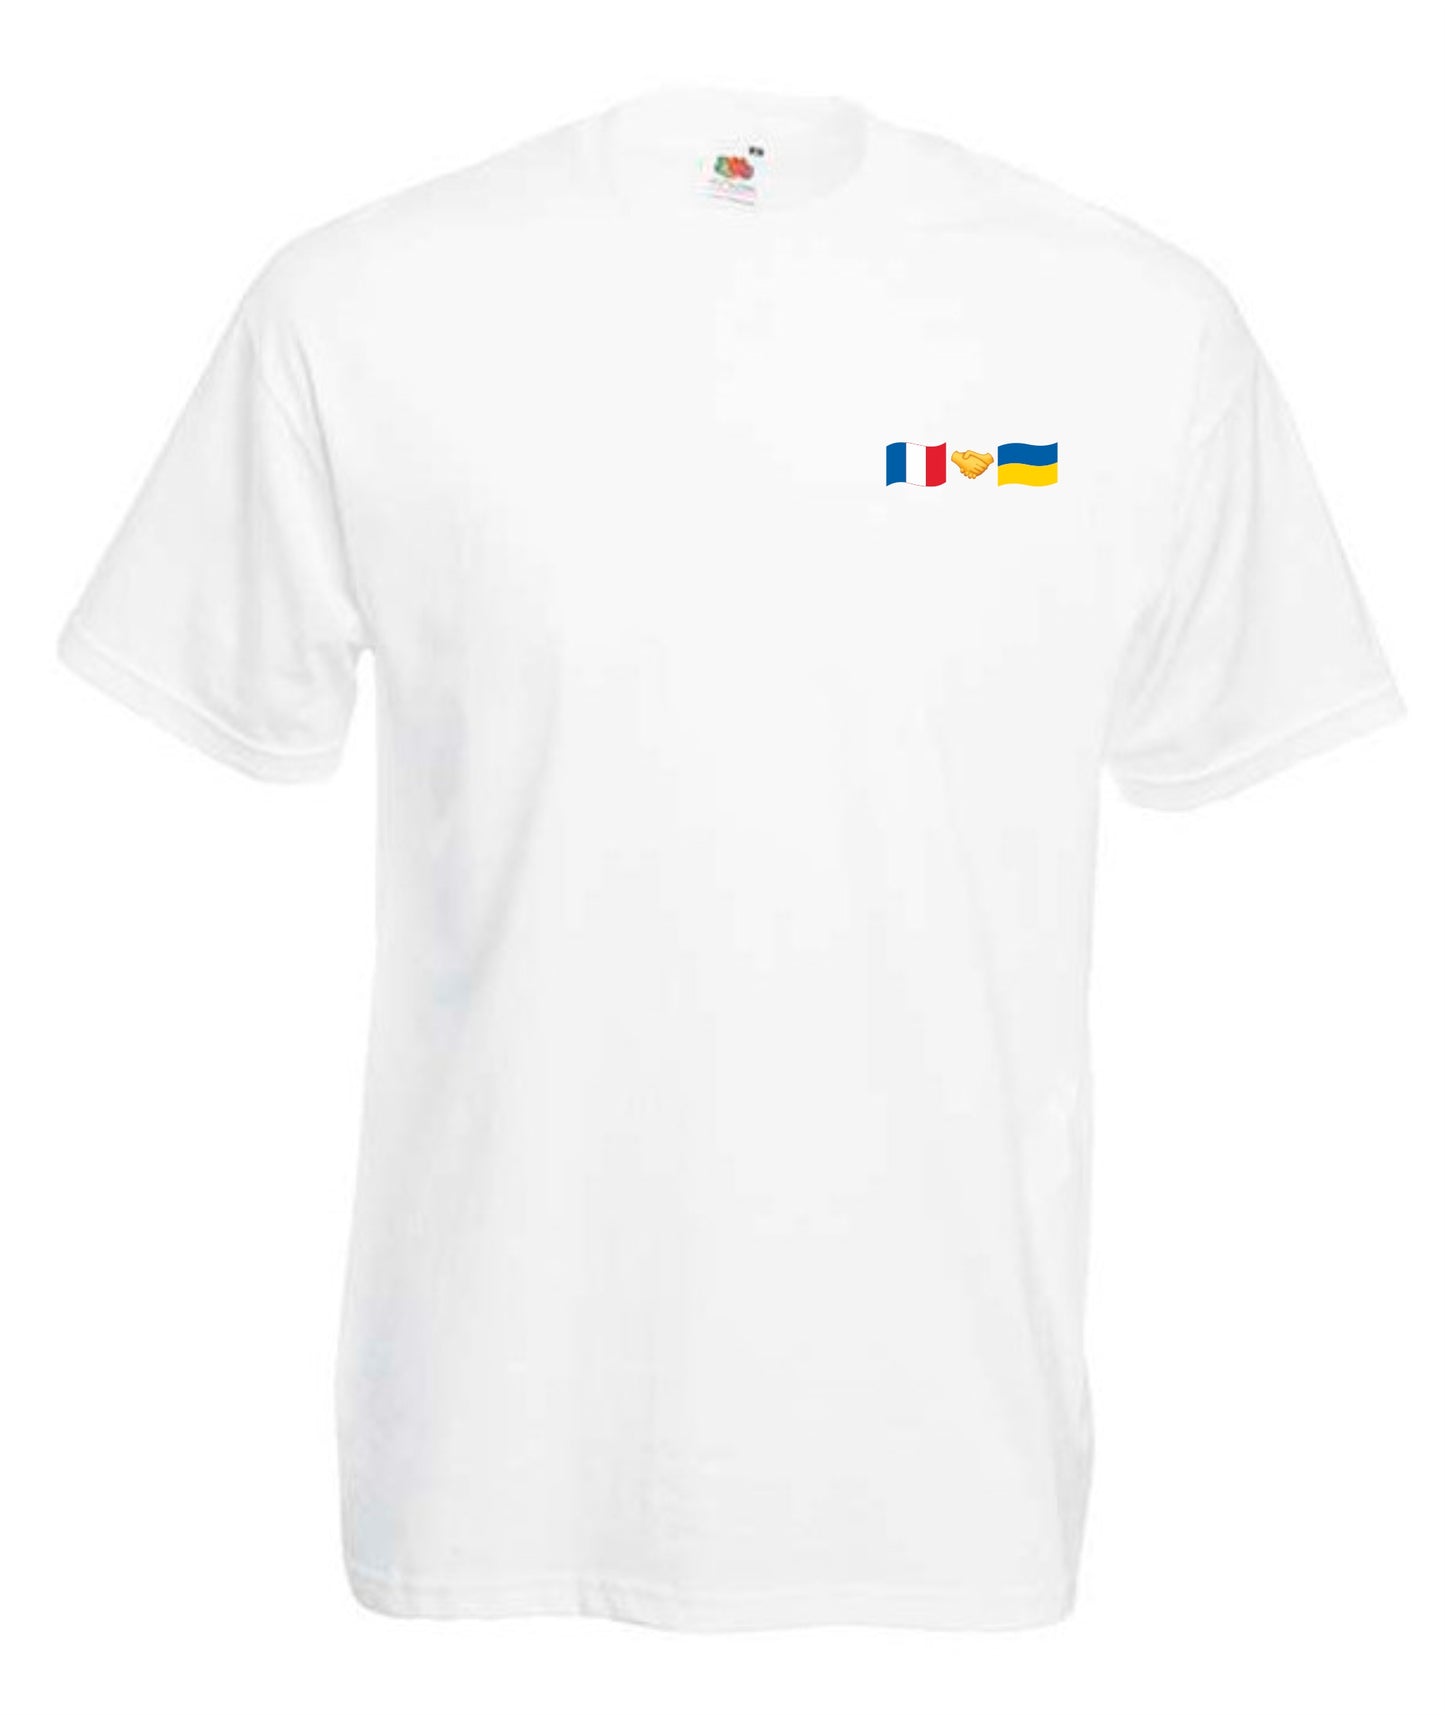 Т-shirt France + Ukraine (small logo)